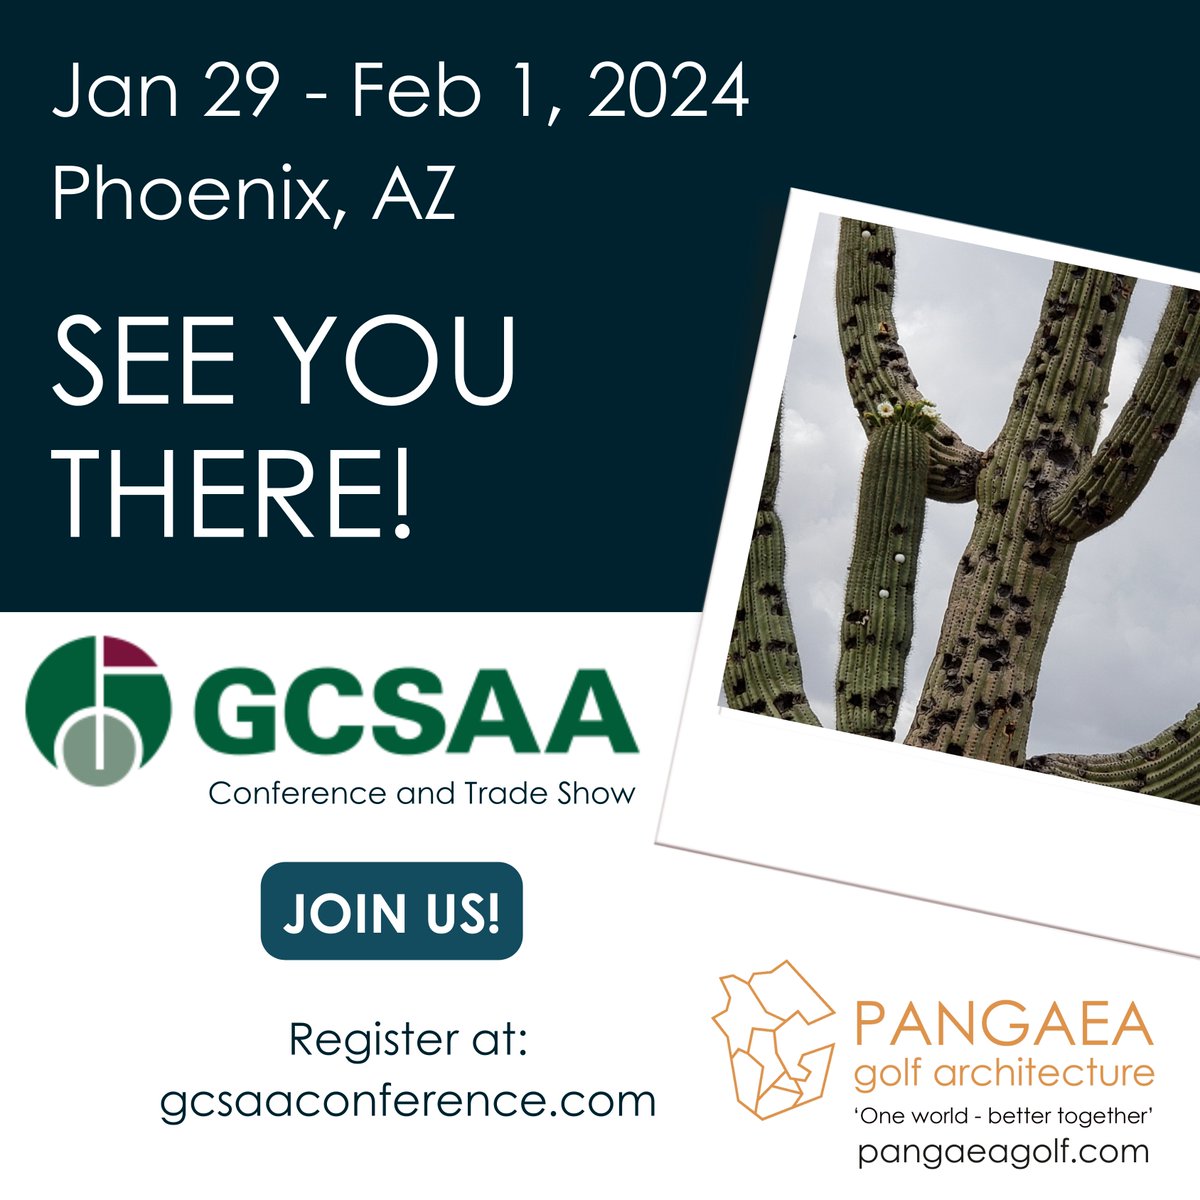 @RennieDesign1 and I will be at the GCSAA Conference in Phoenix, Jan 29 - Feb 1, 2024. Looking forward to seeing old friends and meeting some new ones! @GCSAAConference @GCSAA @gcsanc @ASGCA @EIGCA @GCBAA @USGA @RandA #GCSAAConference @PangaeaGolf #golfcoursearchitecture #golf